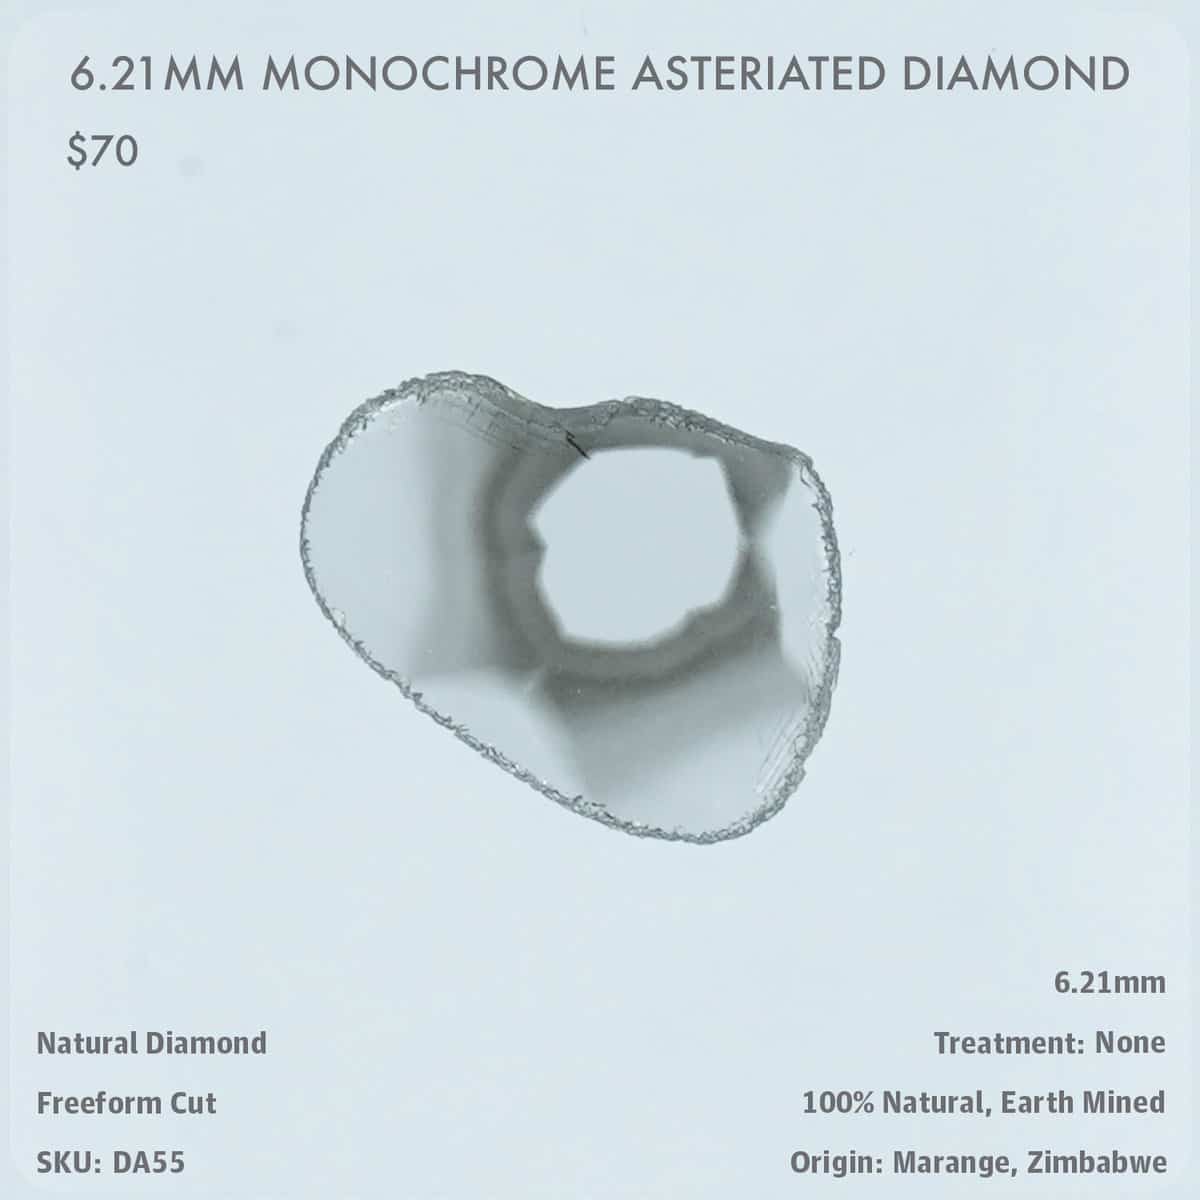 6.21mm Monochrome Asteriated Diamond